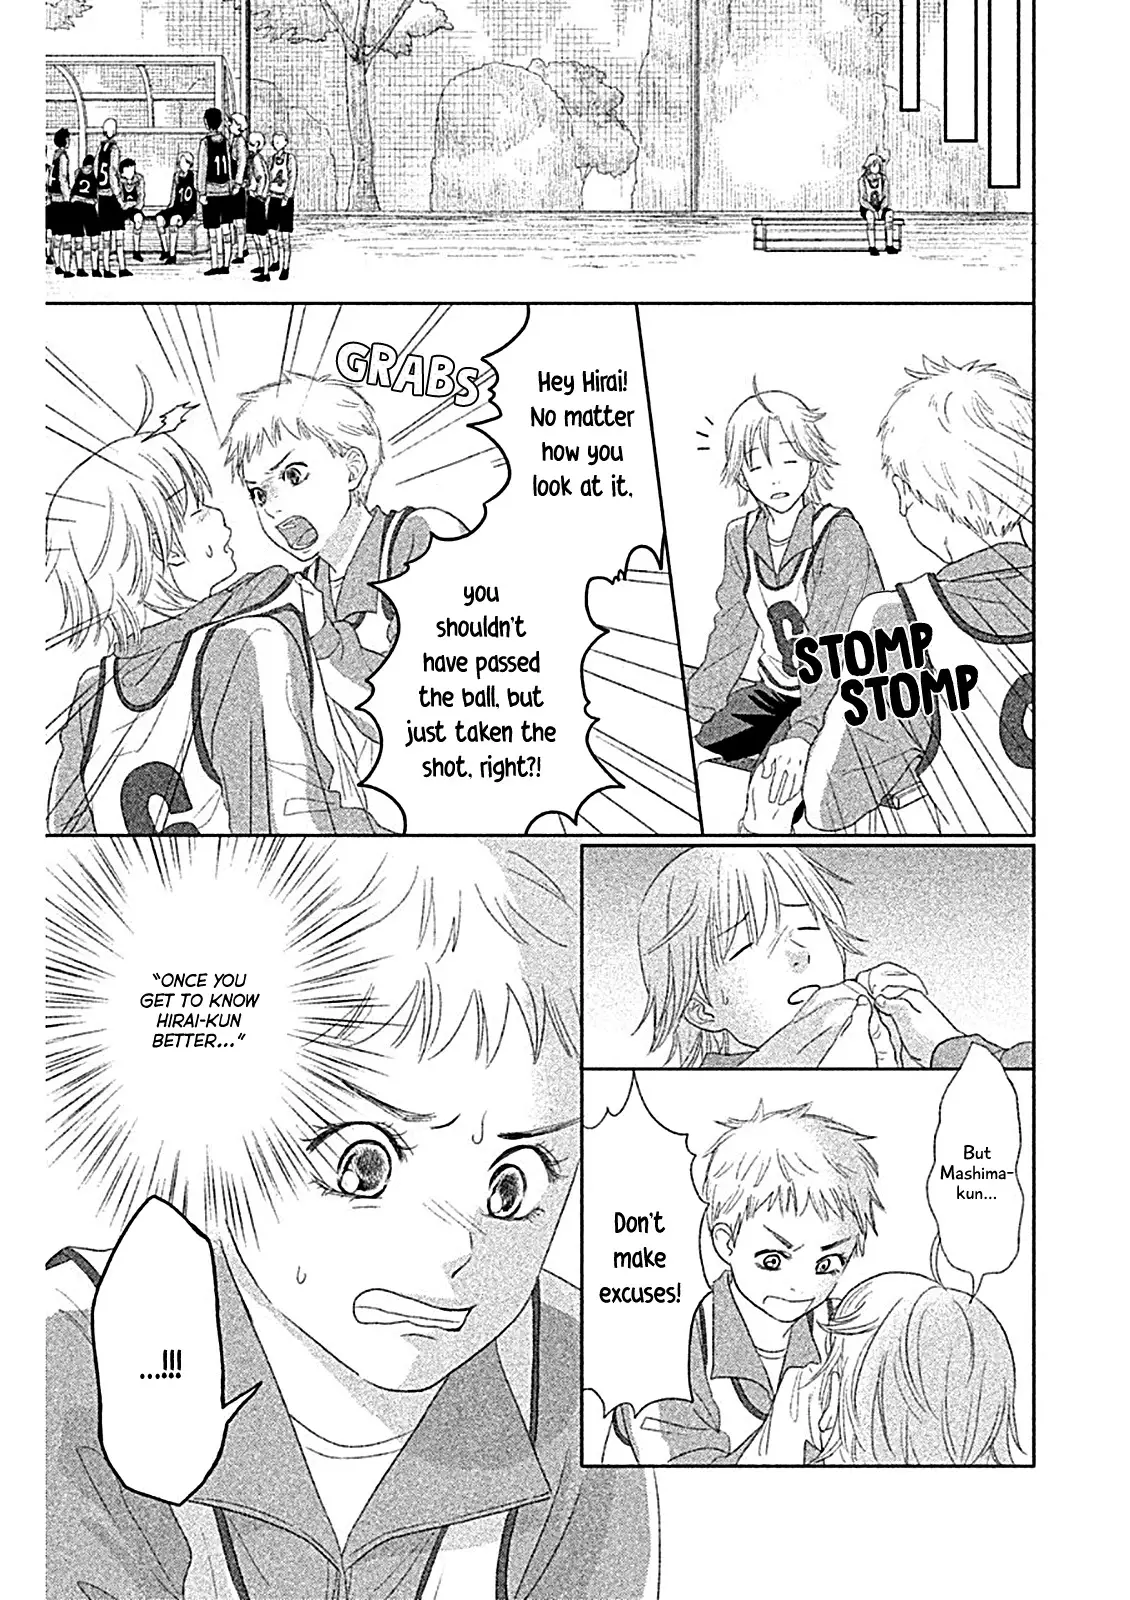 Chihayafuru: Middle School Arc - 4 page 14